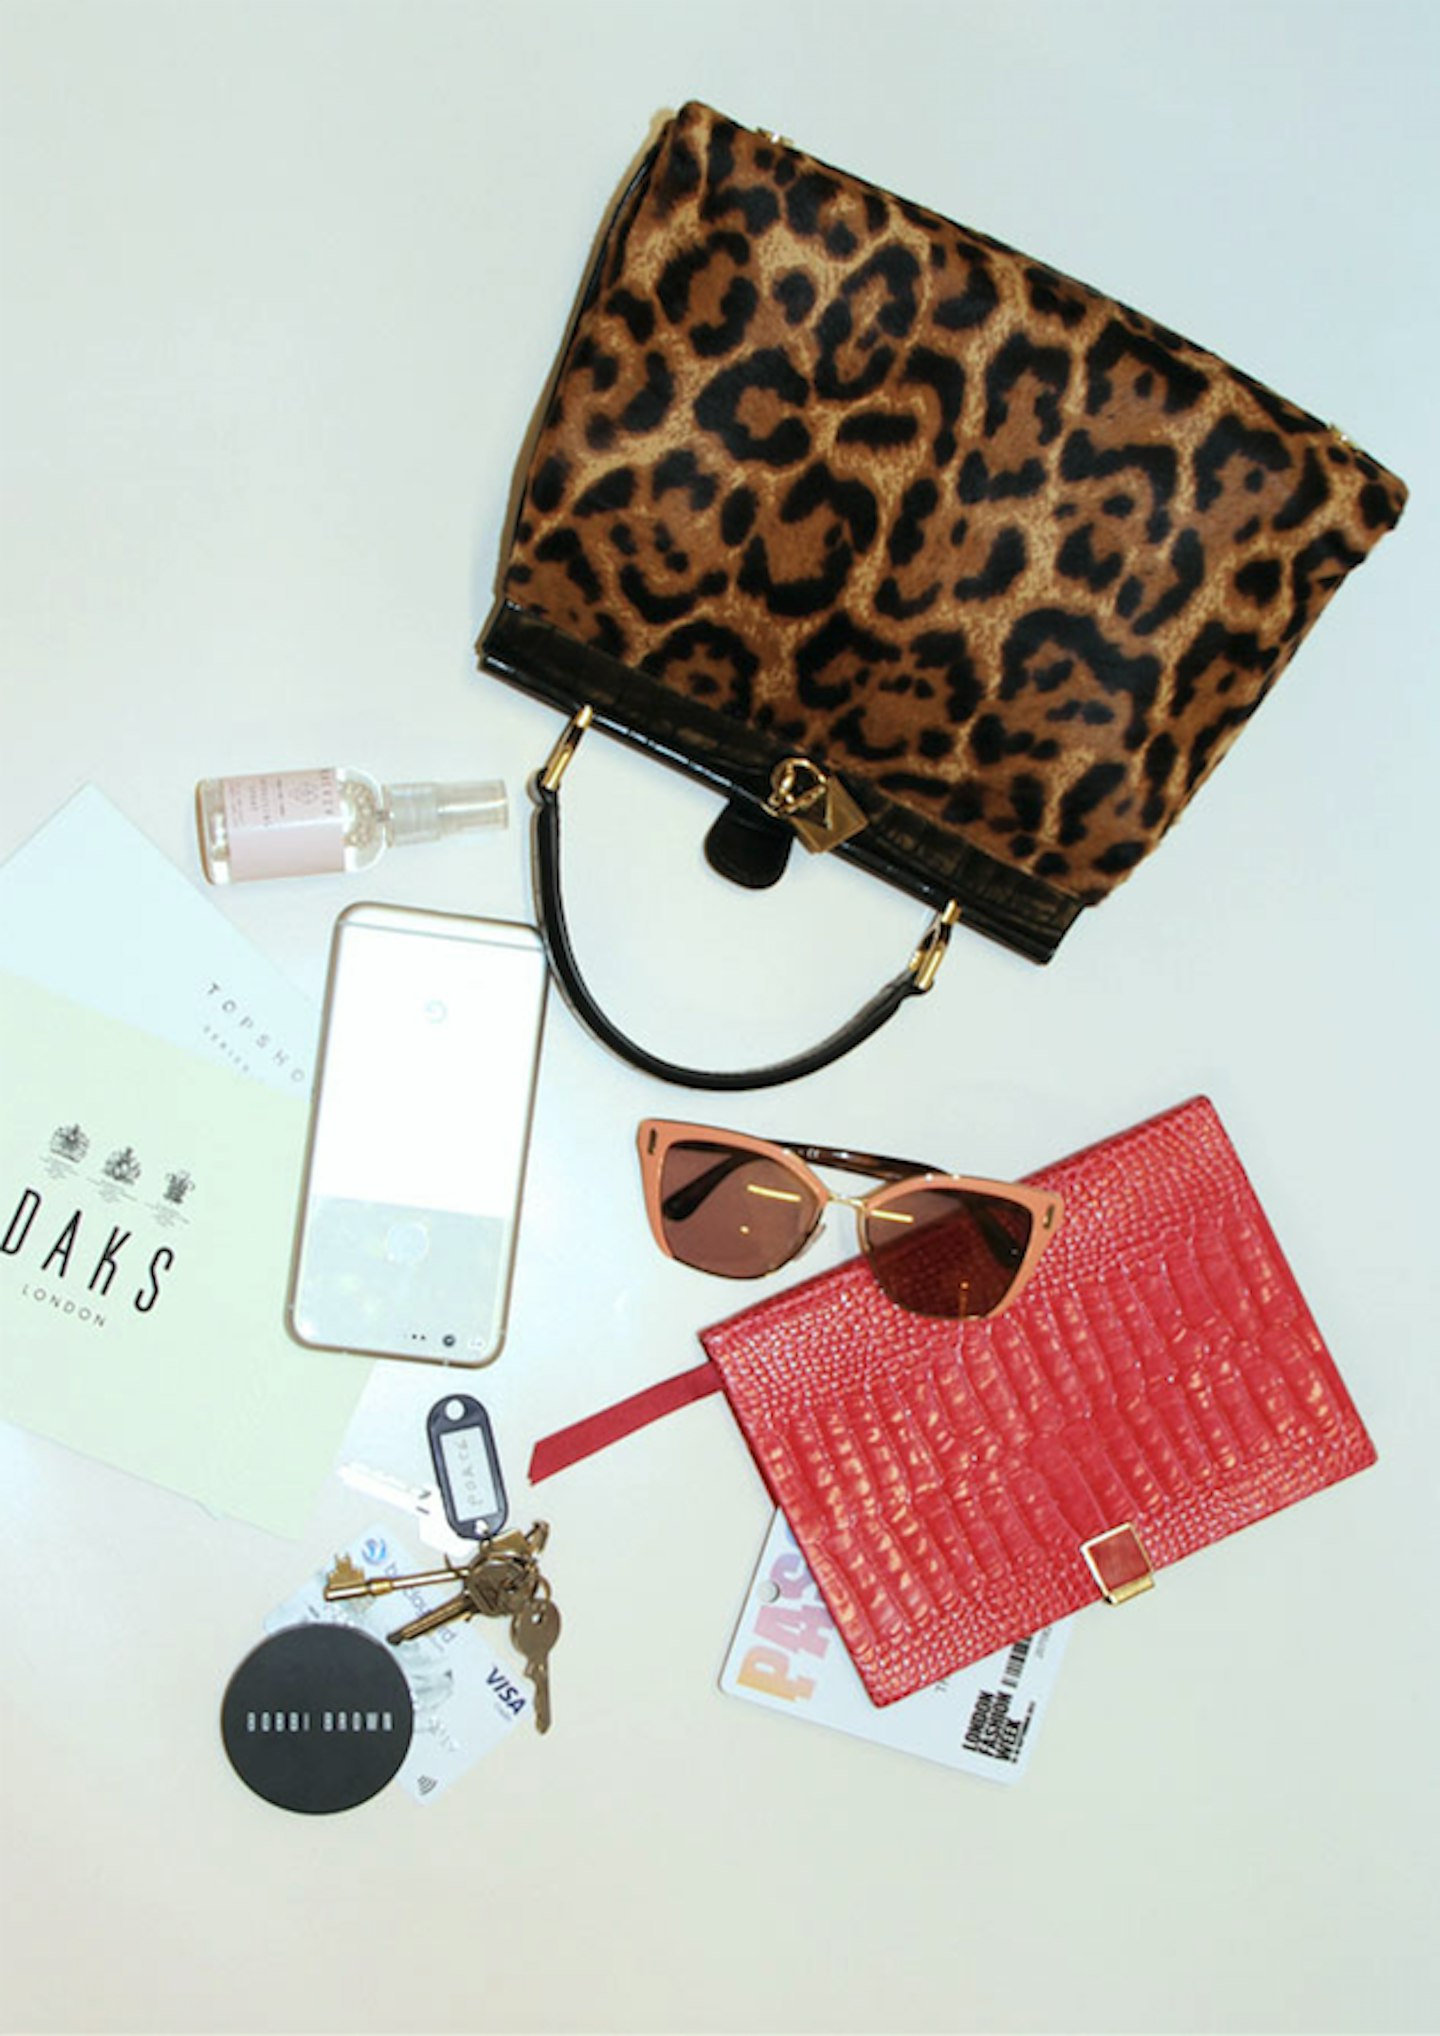 What's in a fashion editor's handbag?